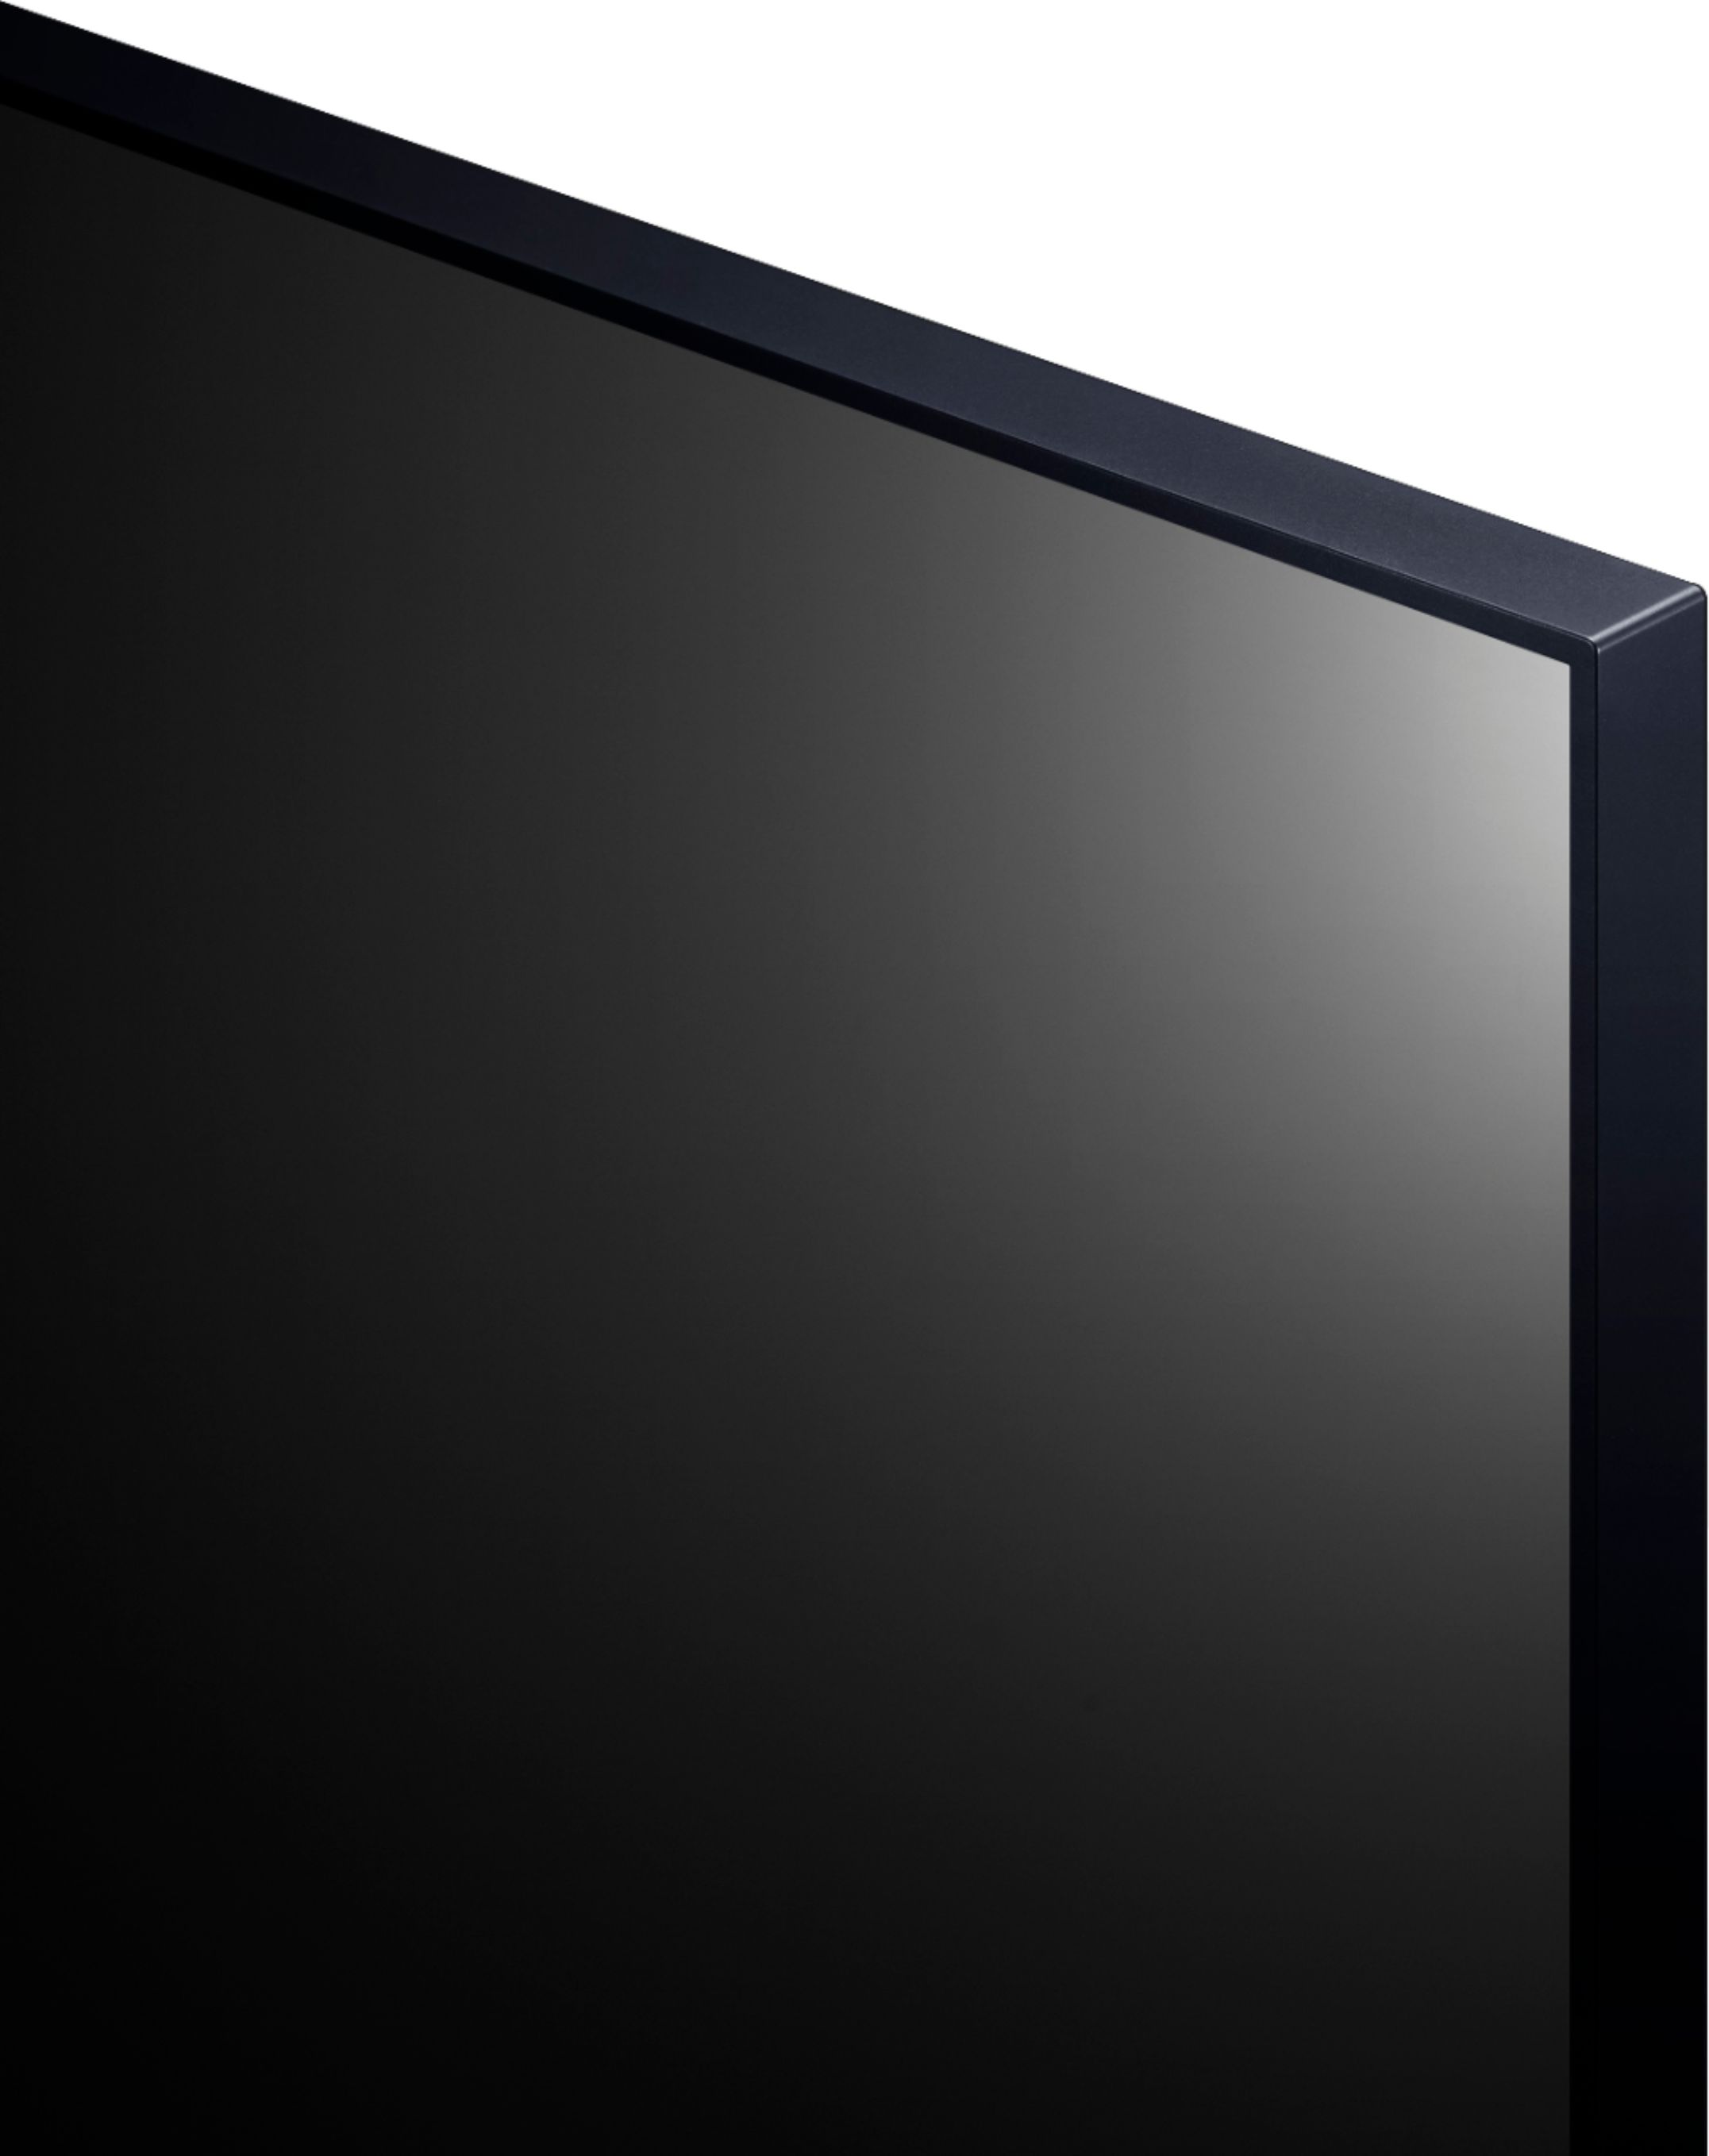  LG 50UP8000PUR Smart TV UHD de 50 pulgadas 4K con Alexa  incorporado (2021) : Electrónica